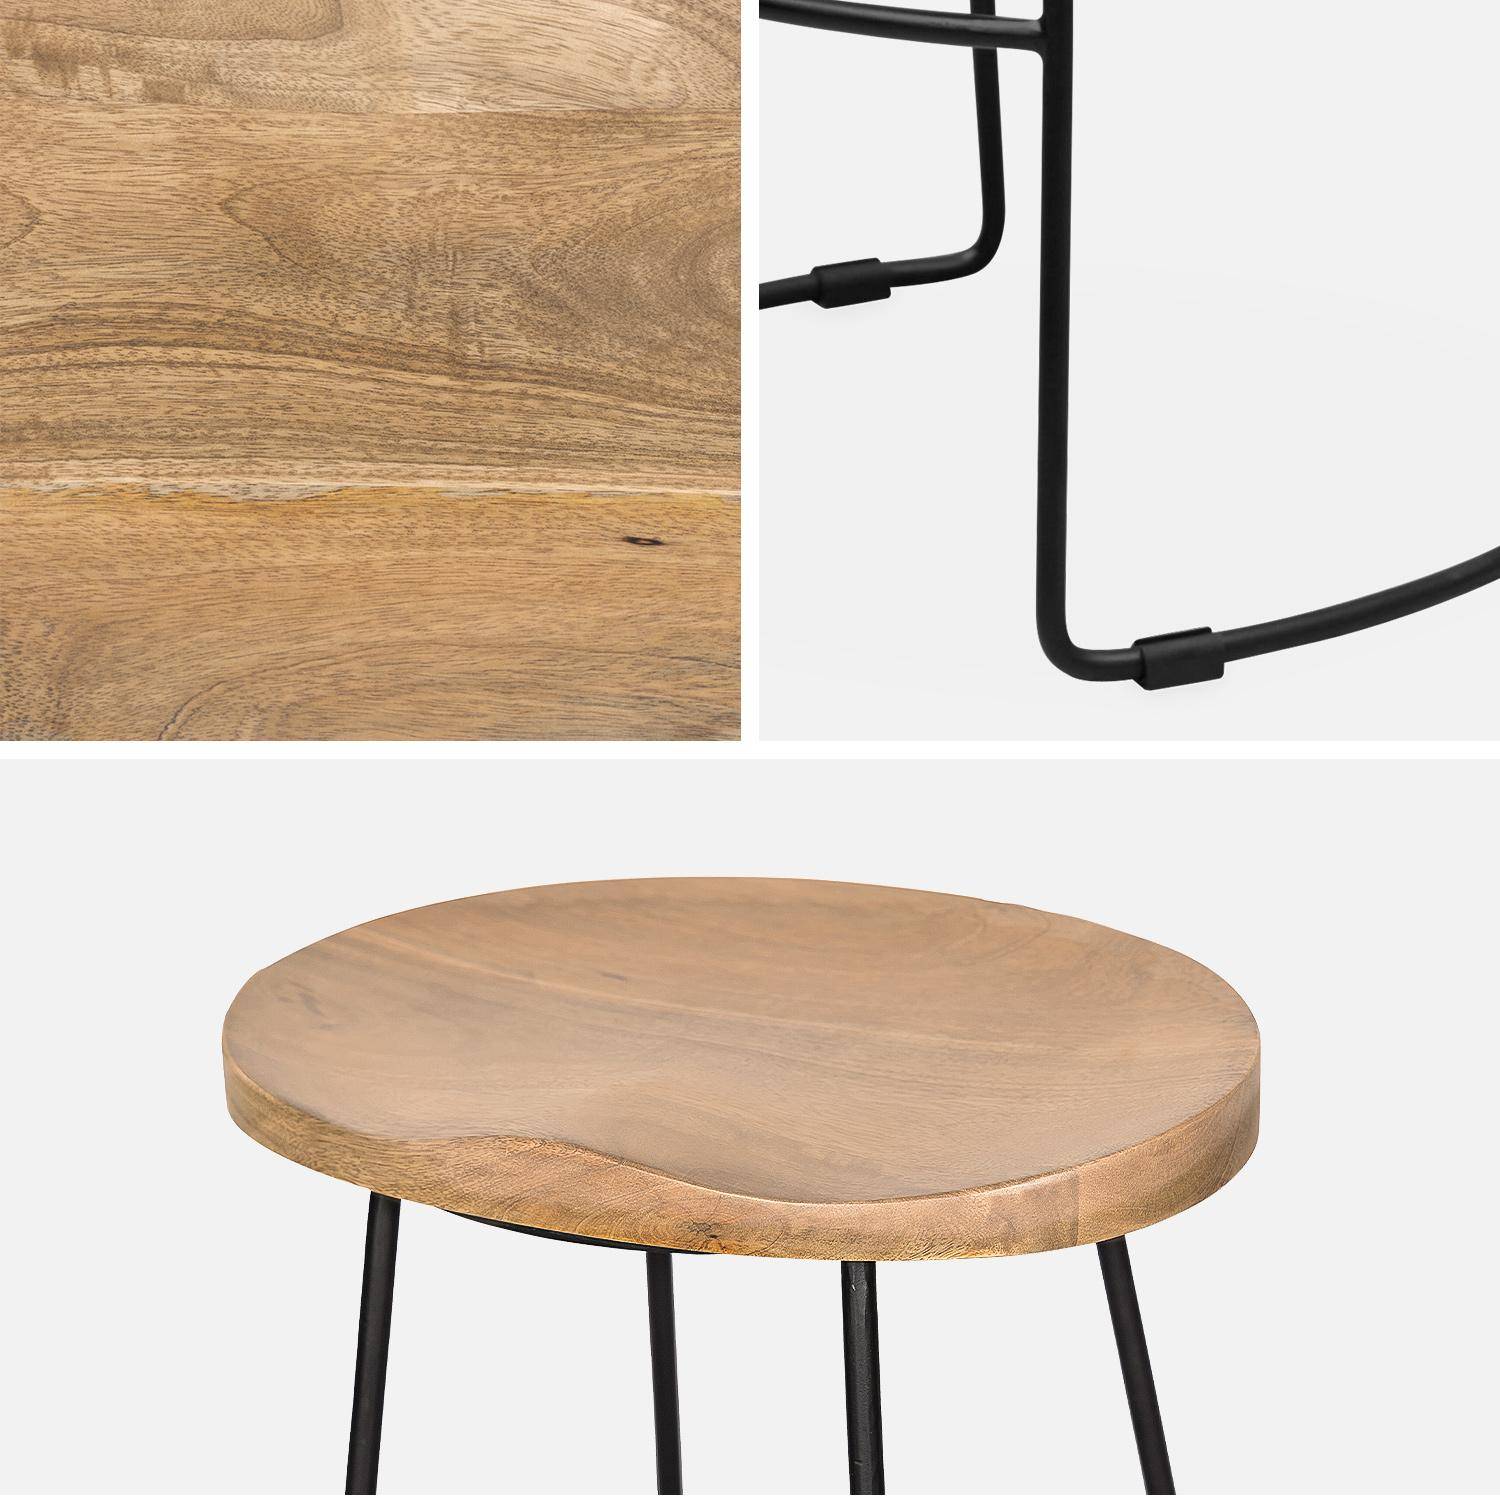 Pair of industrial metal and wooden bar stools, 47x40x75cm, Jaya, Natural, Mango wood seat, black metal legs,sweeek,Photo7